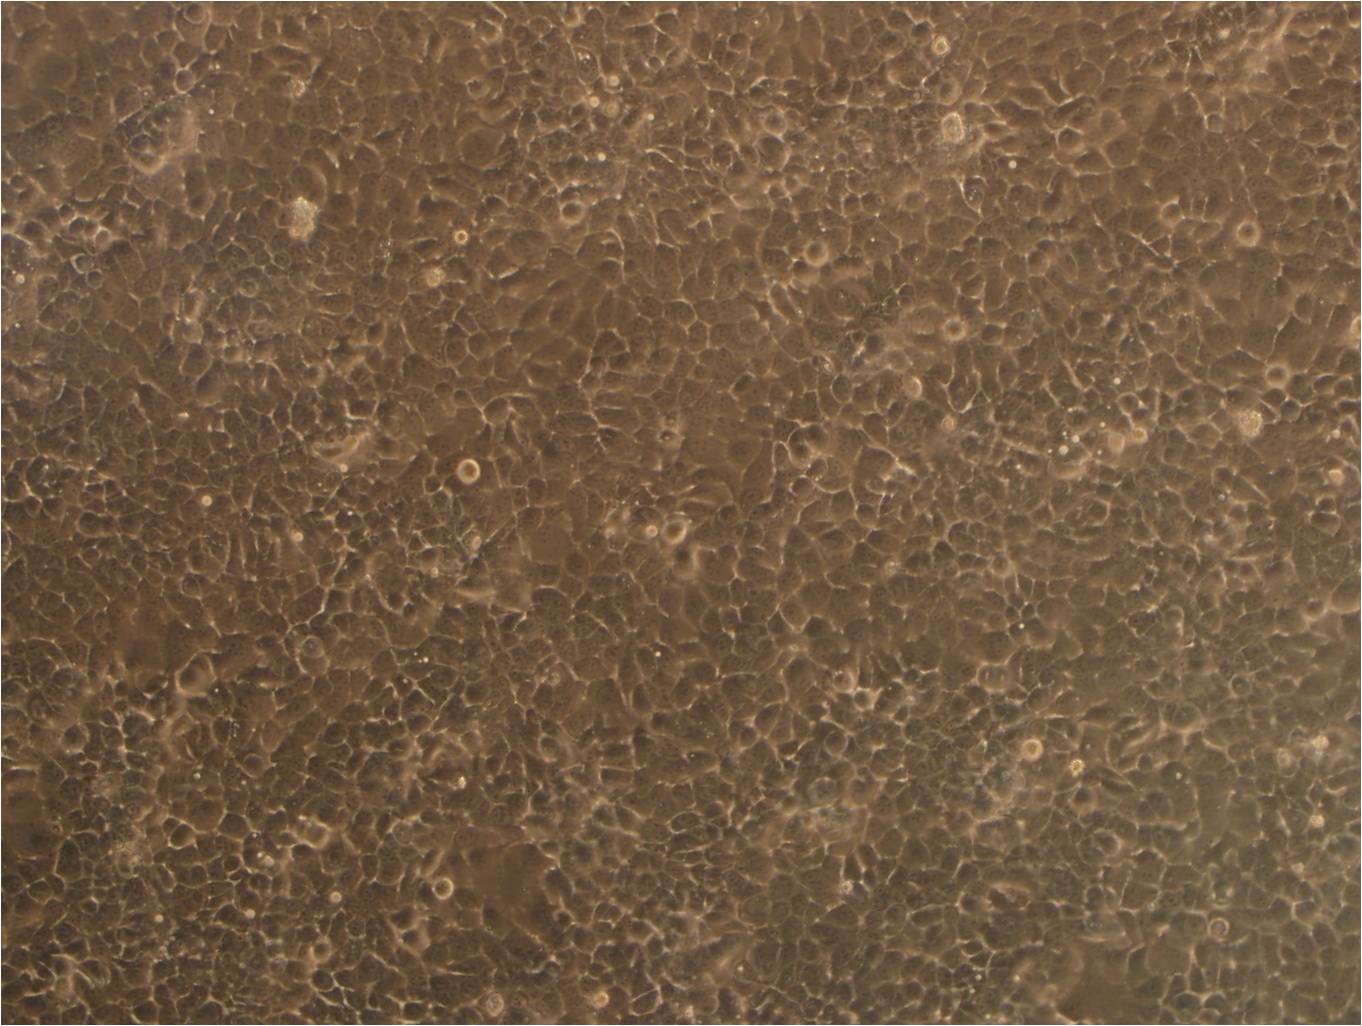 SNU-1:人胃癌复苏细胞(提供STR鉴定图谱),SNU-1